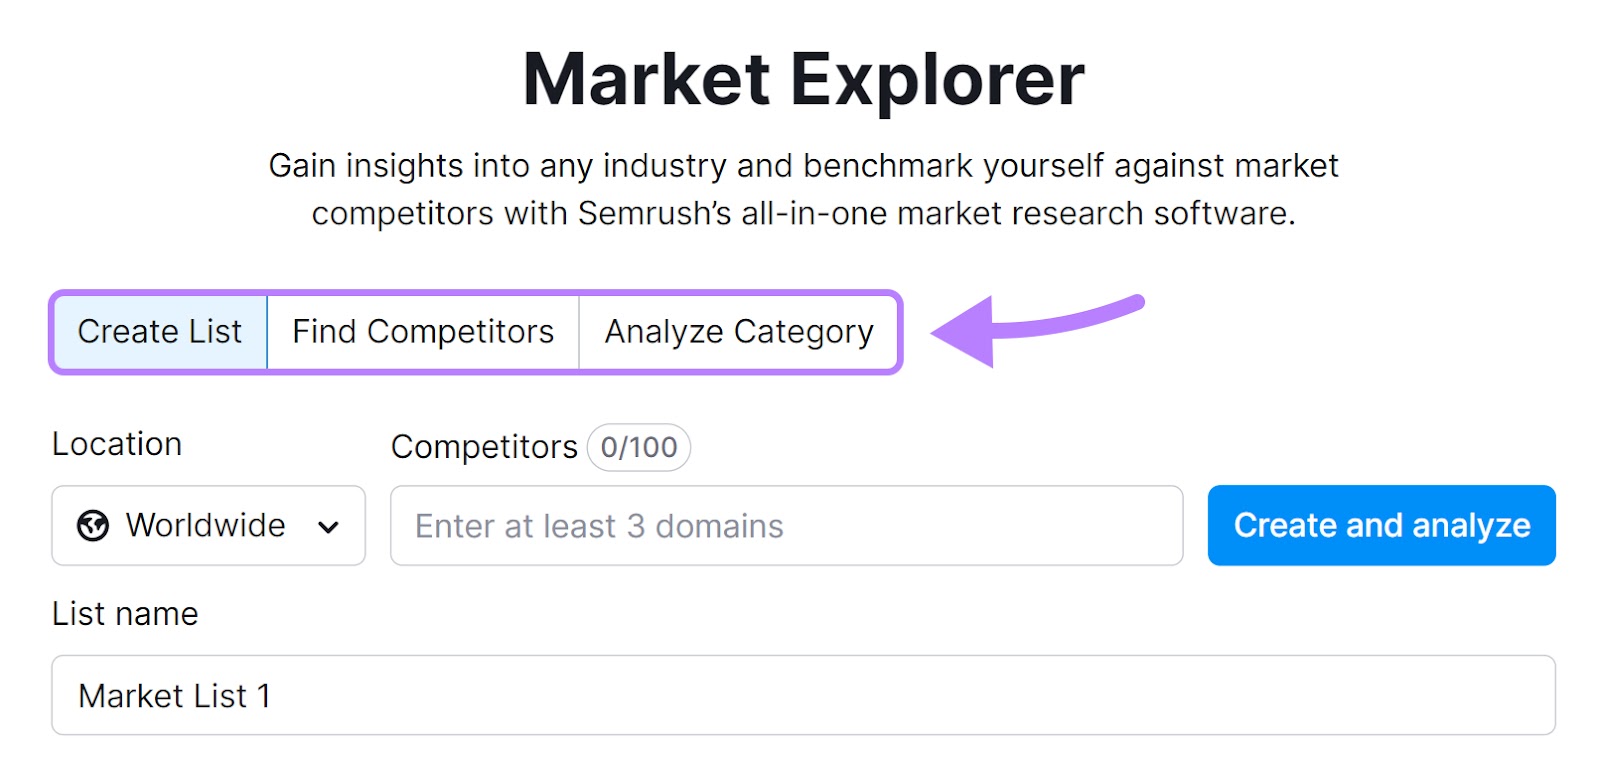 Semrush's Market Explorer tool